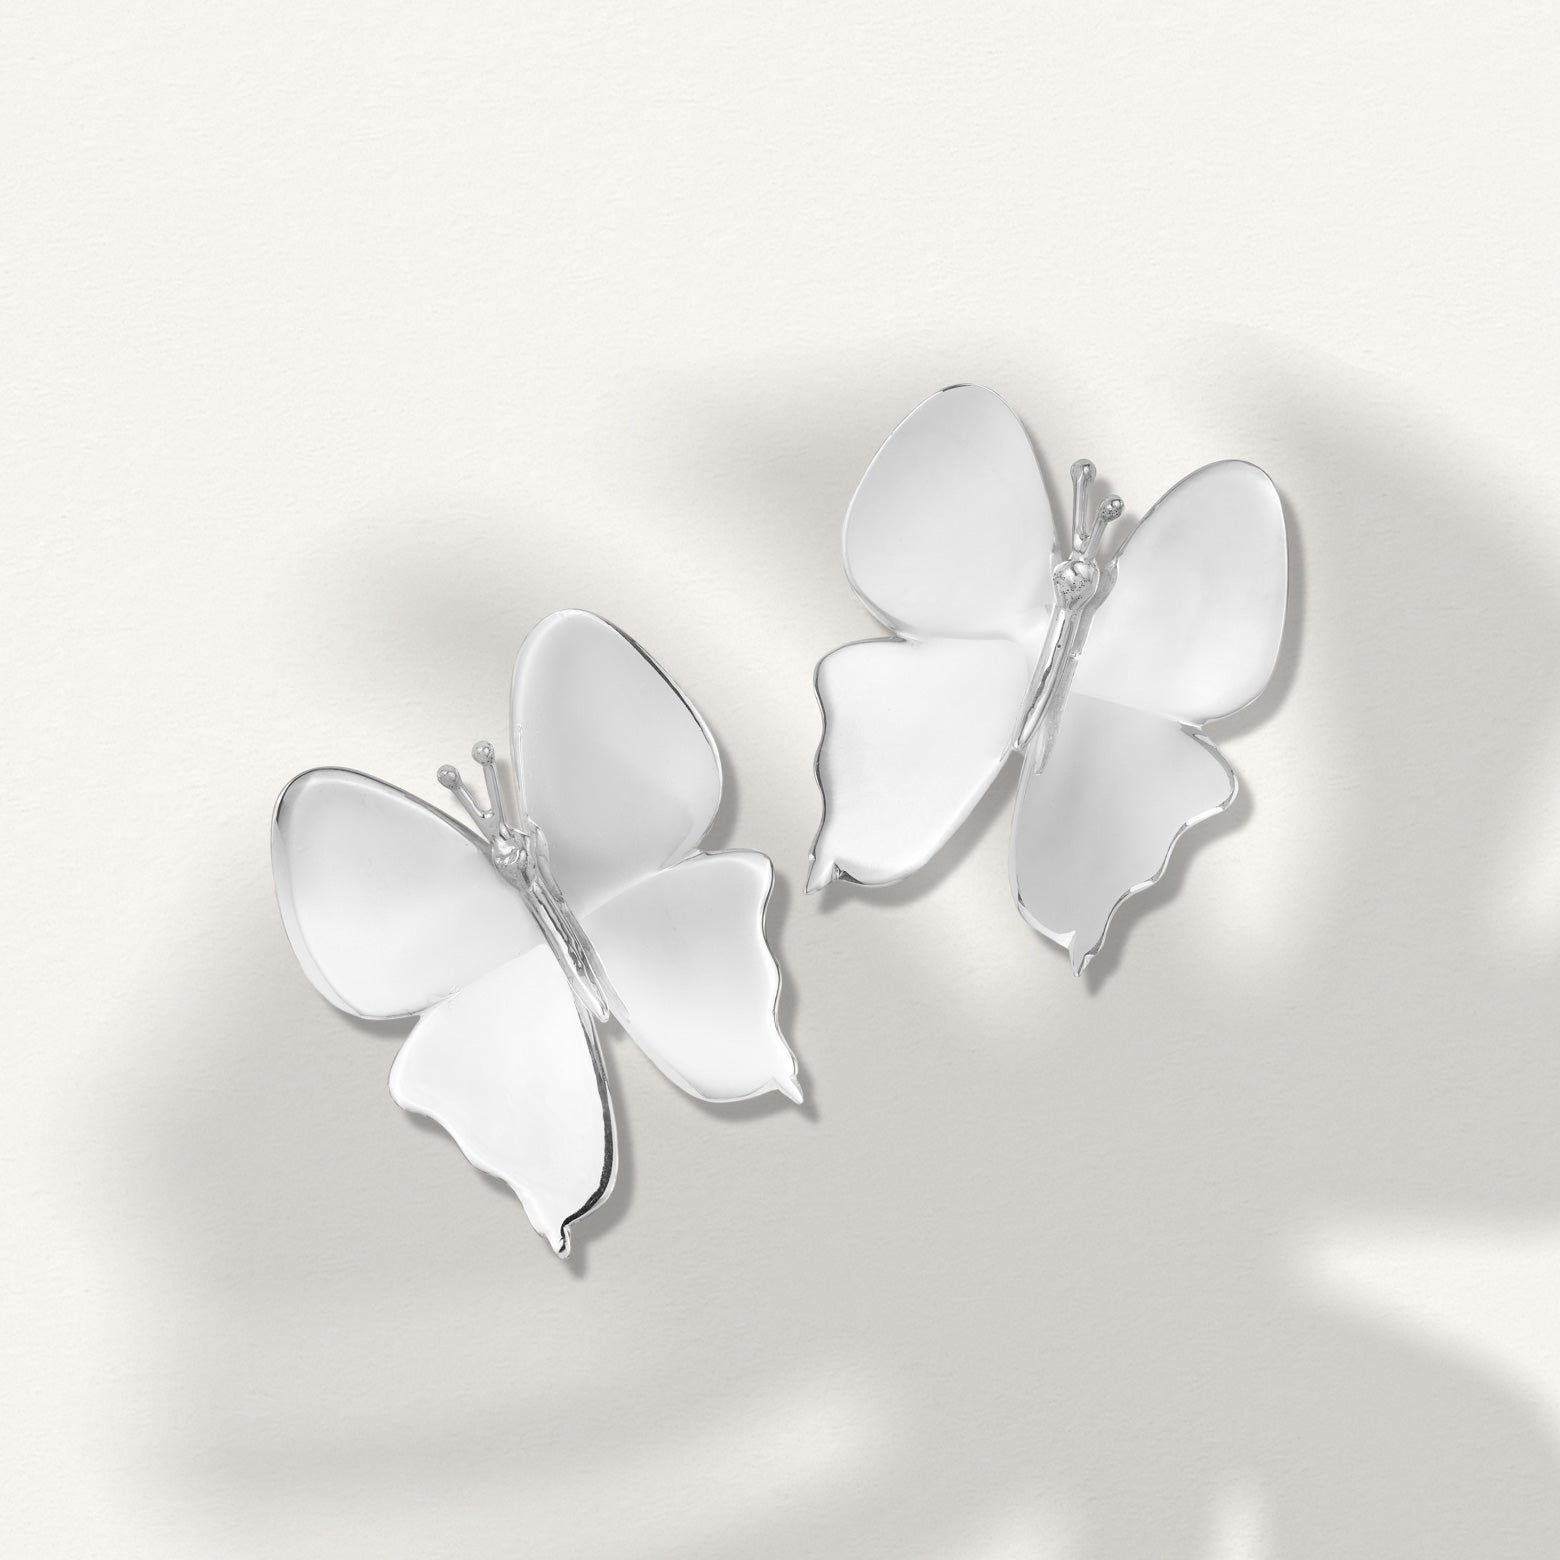 Kelly Woodcroft hand cast silver ulysses butterfly shaped earrings in silver.